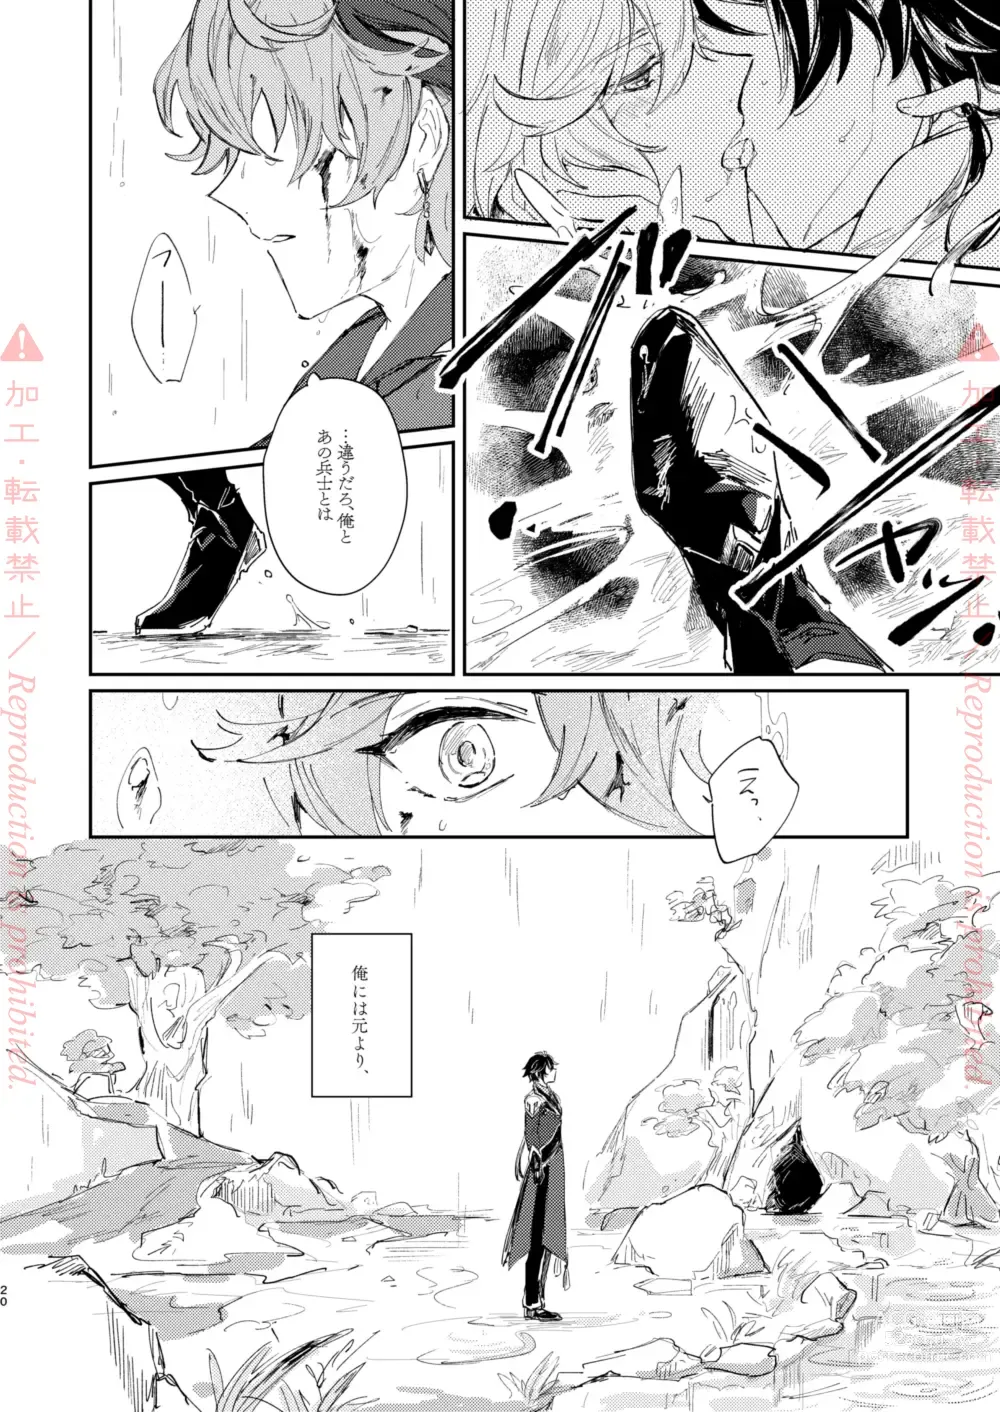 Page 19 of doujinshi Hatsuro